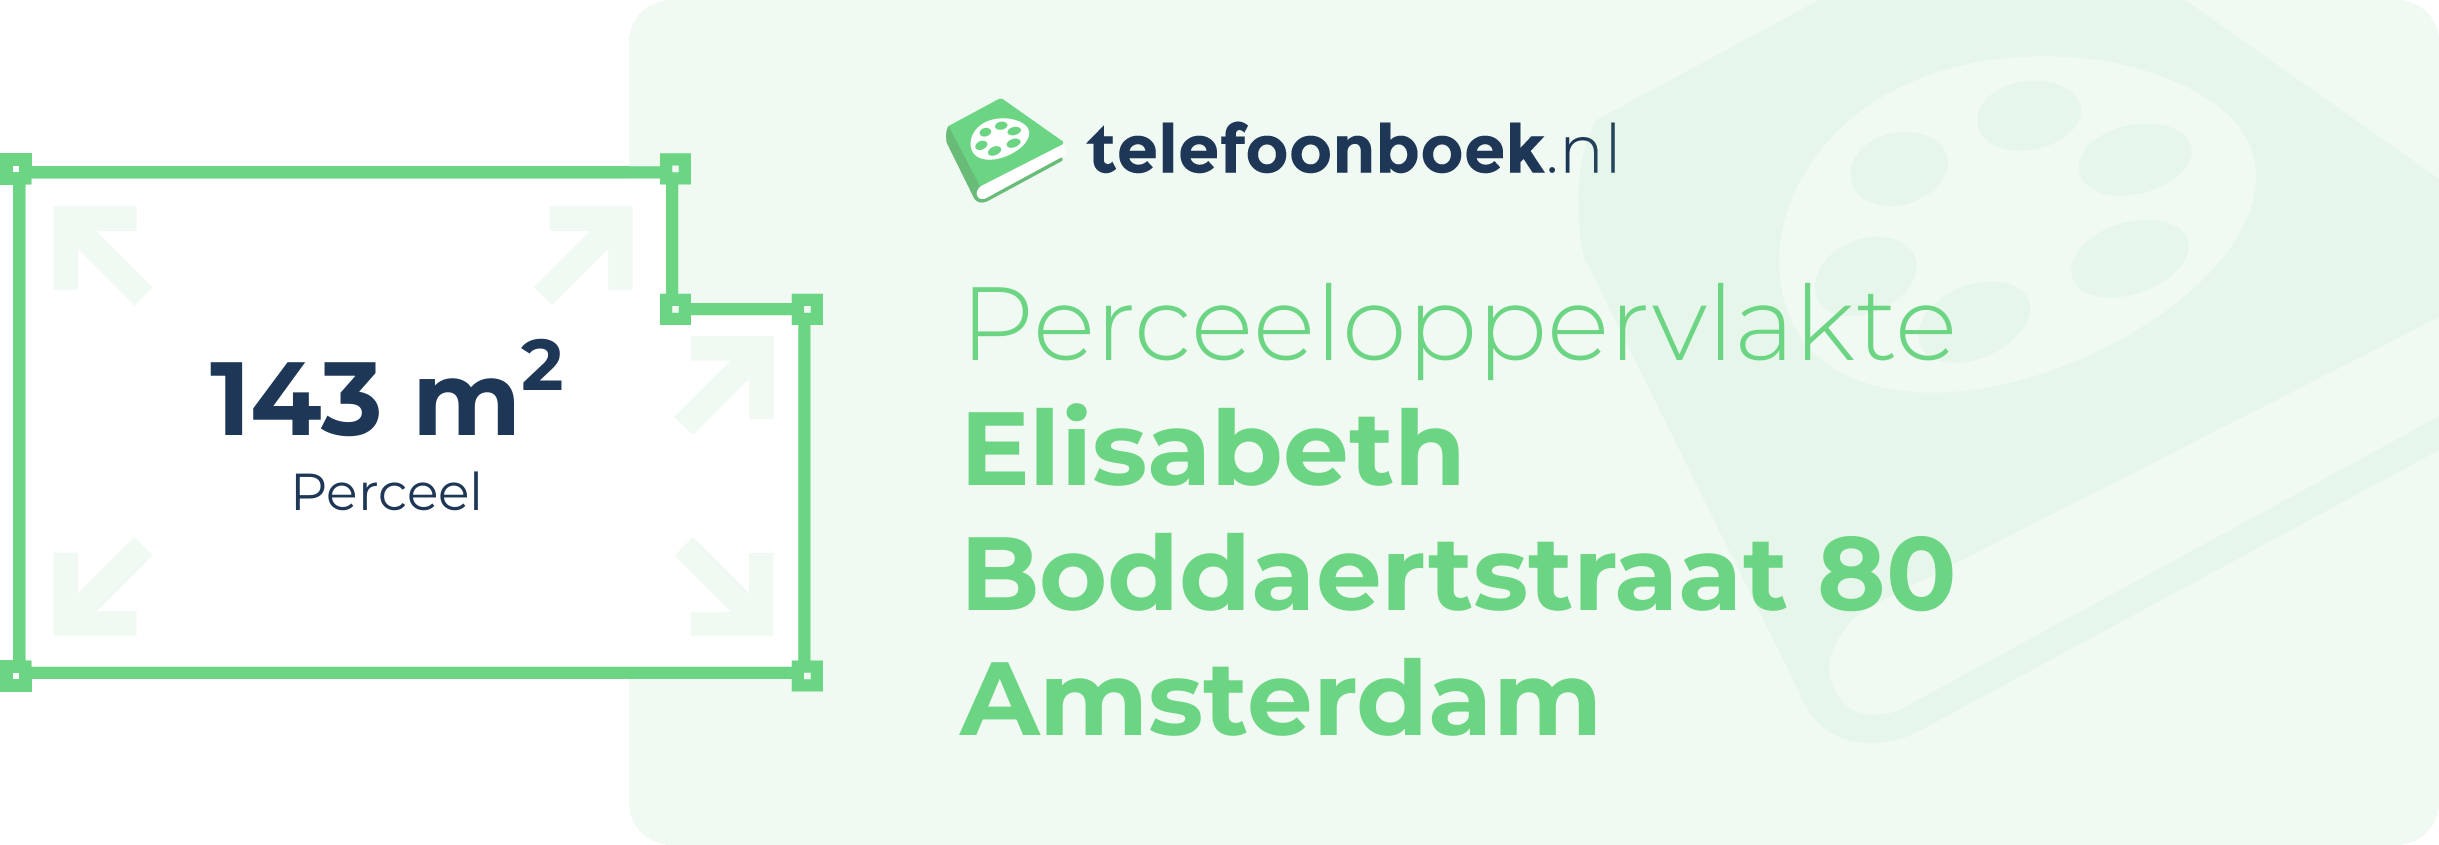 Perceeloppervlakte Elisabeth Boddaertstraat 80 Amsterdam